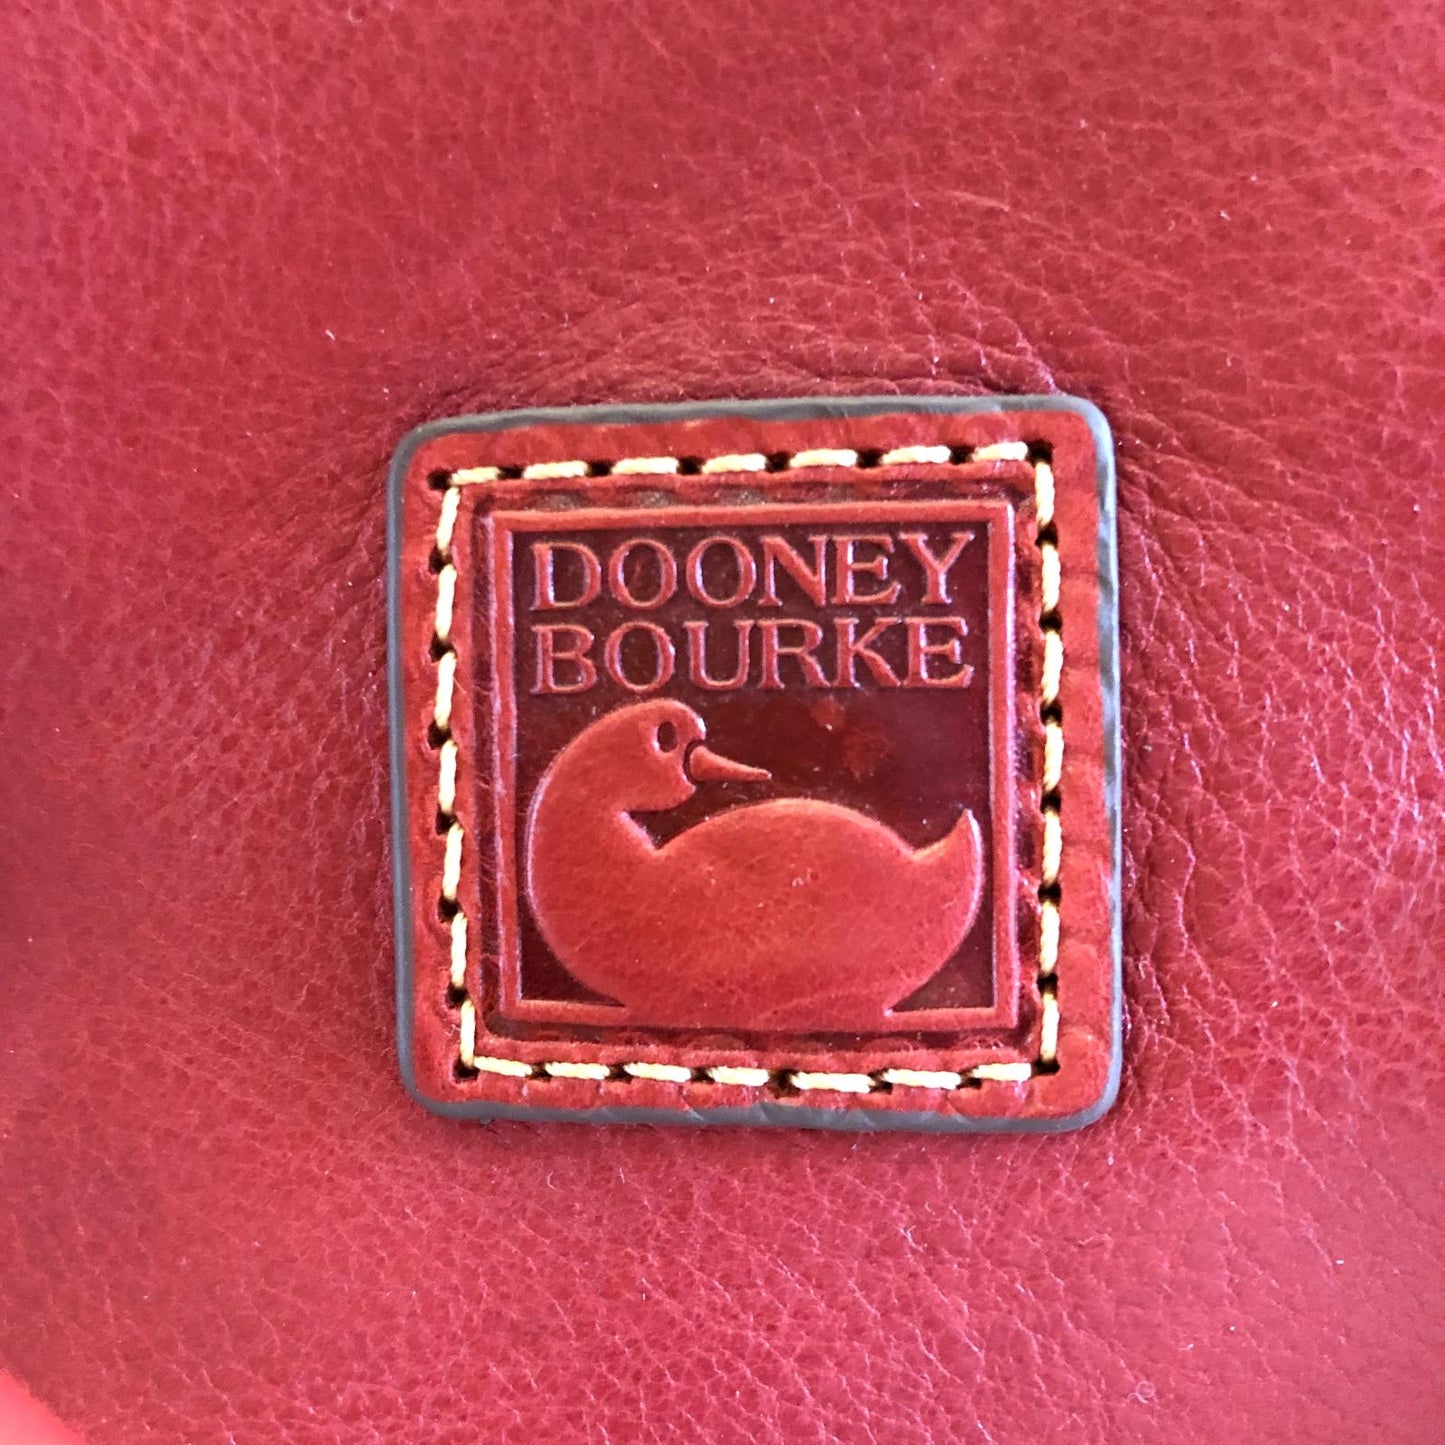 Dooney & Bourke $438 Red Florentine Leather Micro Satchel Purse NEW 0221PG